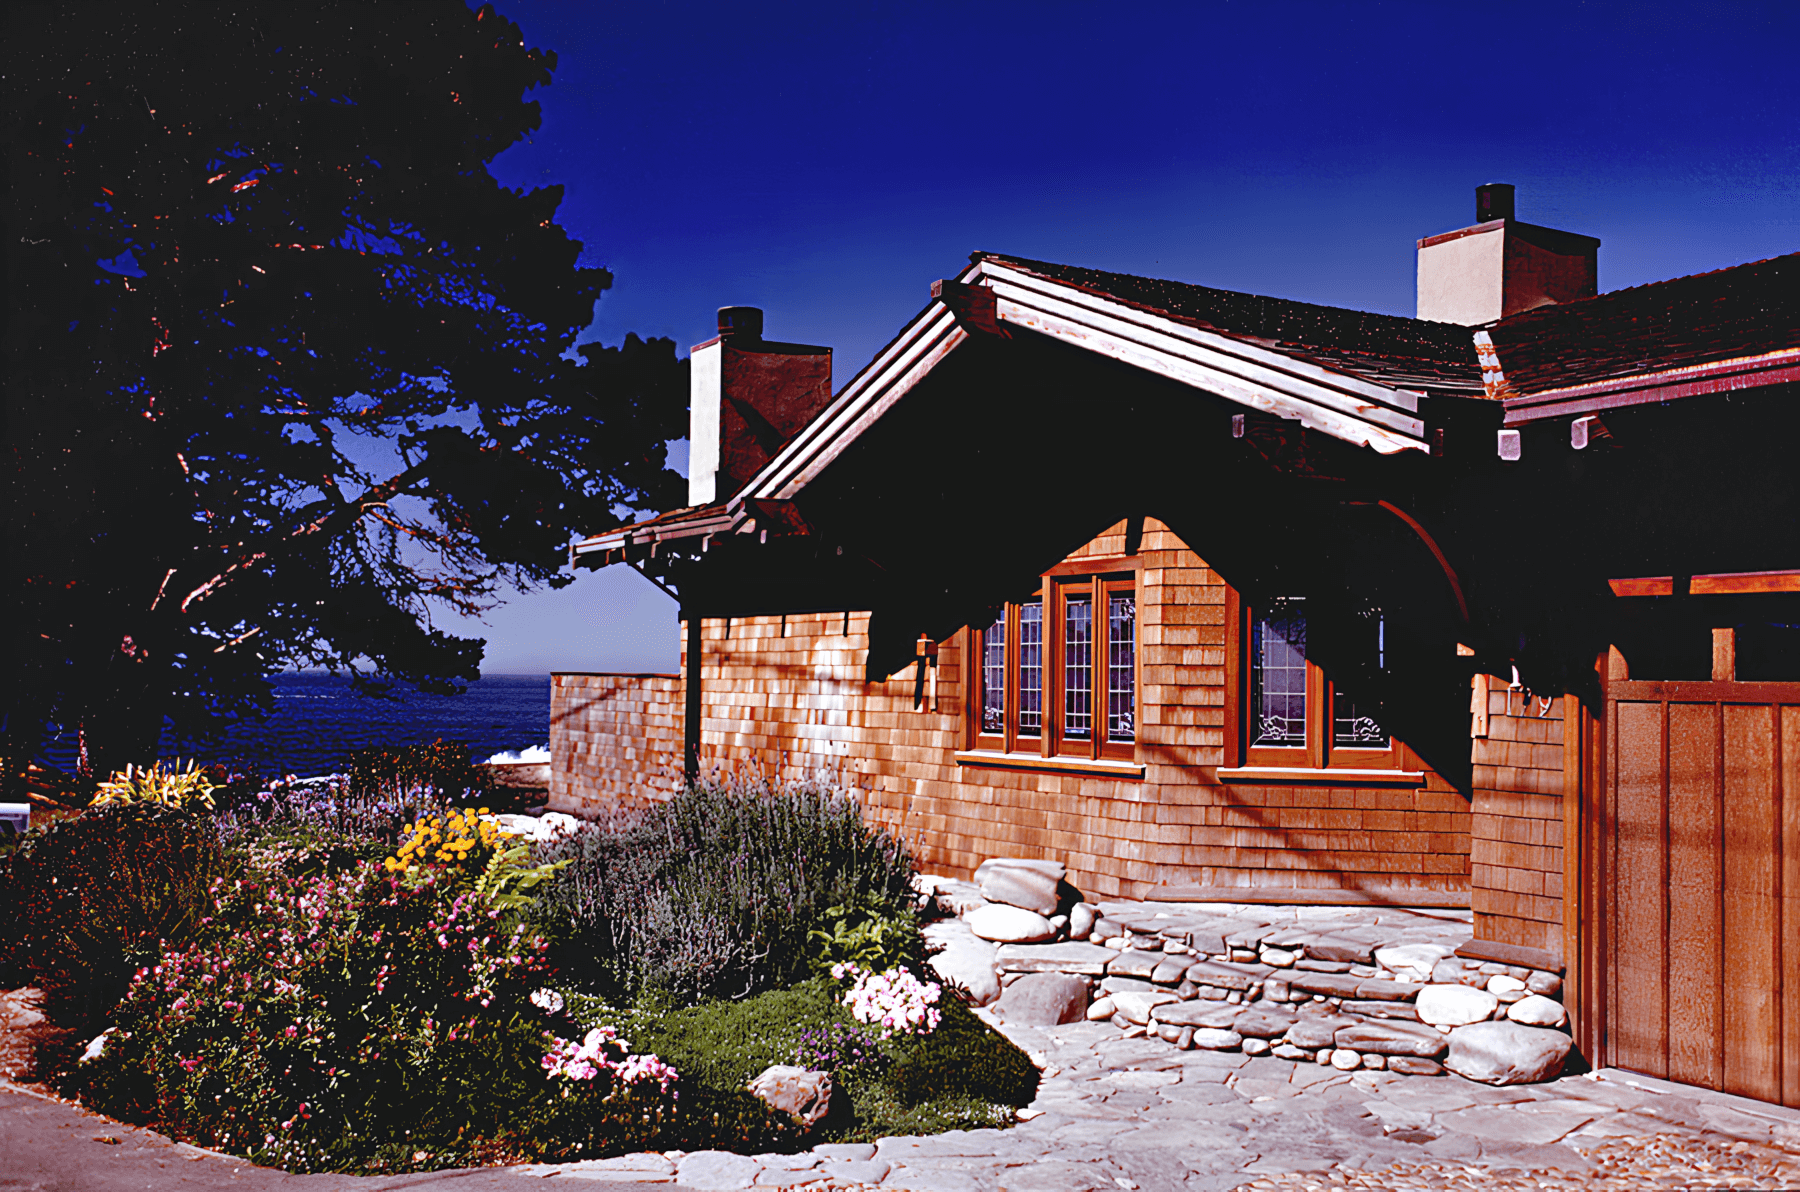 Image of Sunny Cove house located in Santa Cruz, California, designed by architect Jeff Finsand.